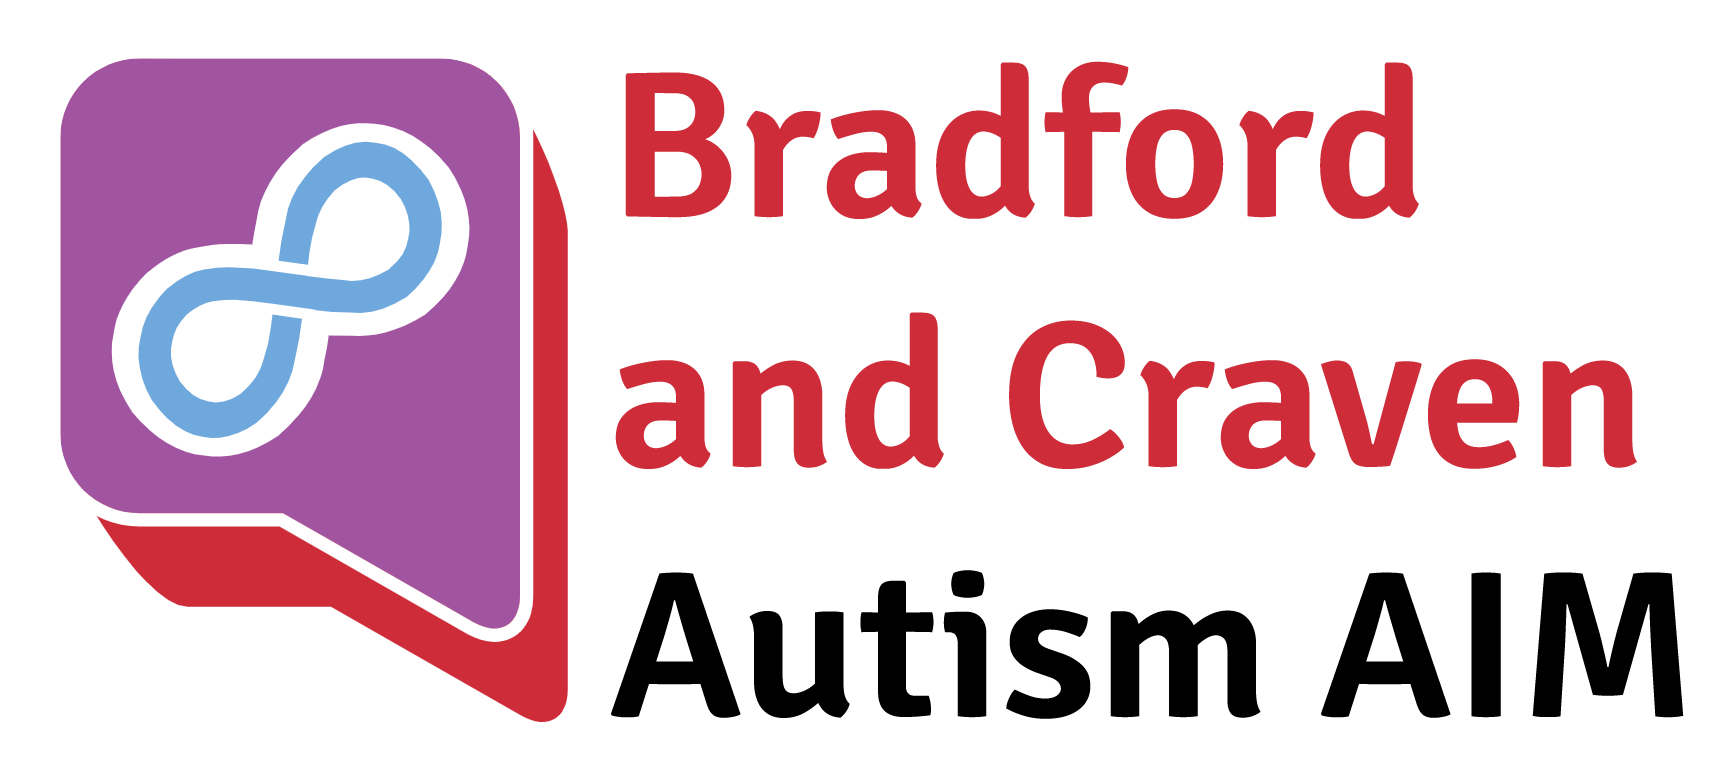 Bradford and Craven Autism AIM logo